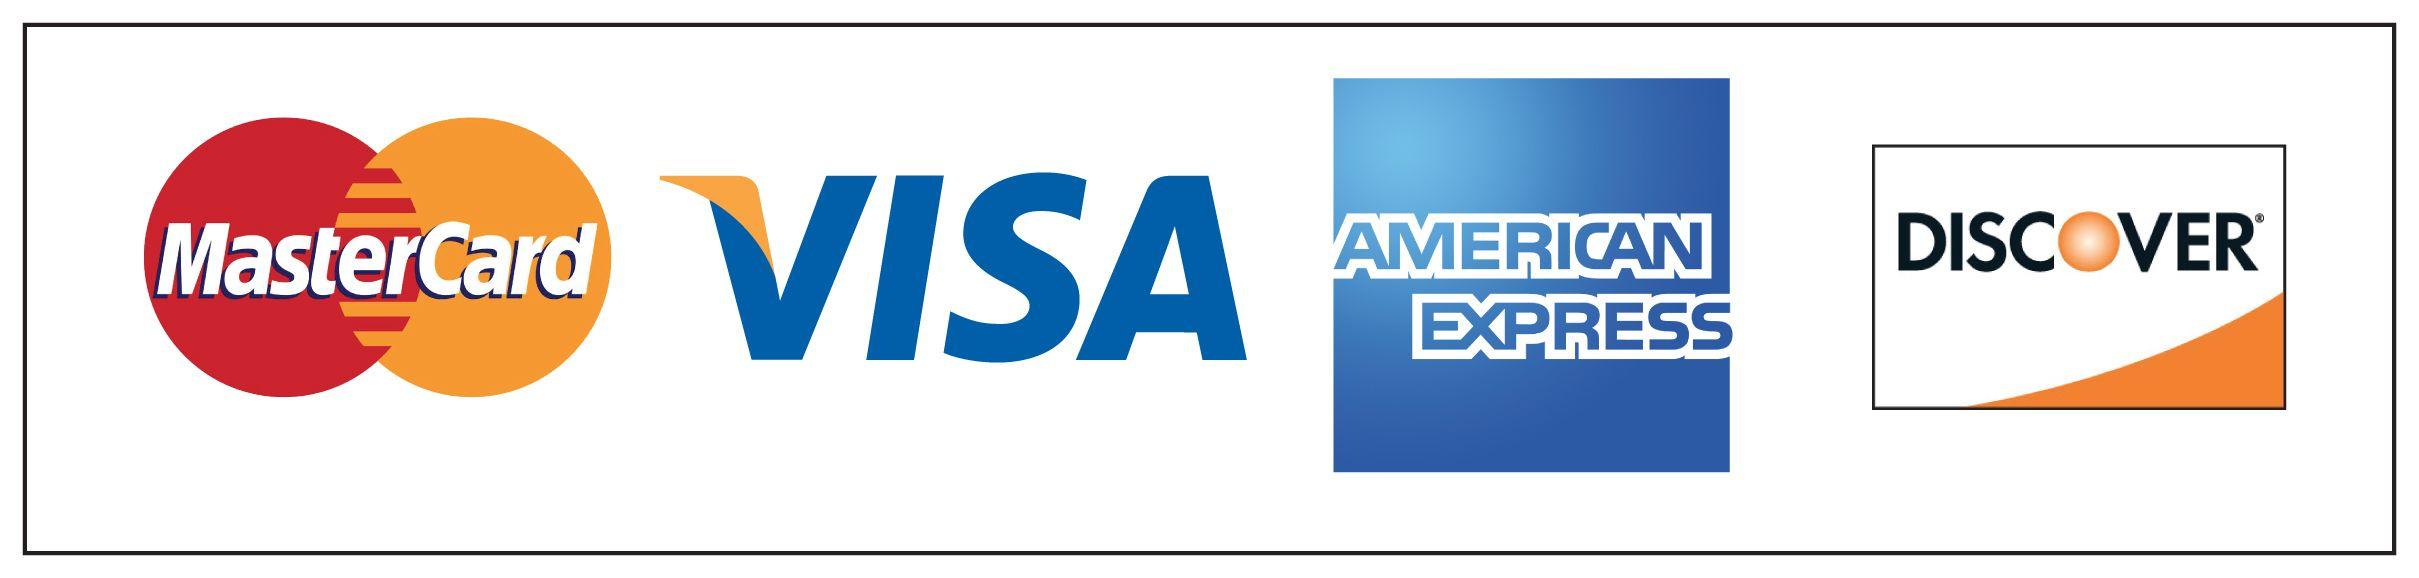 Printable Credit Card Logo - Cards accepted Logos